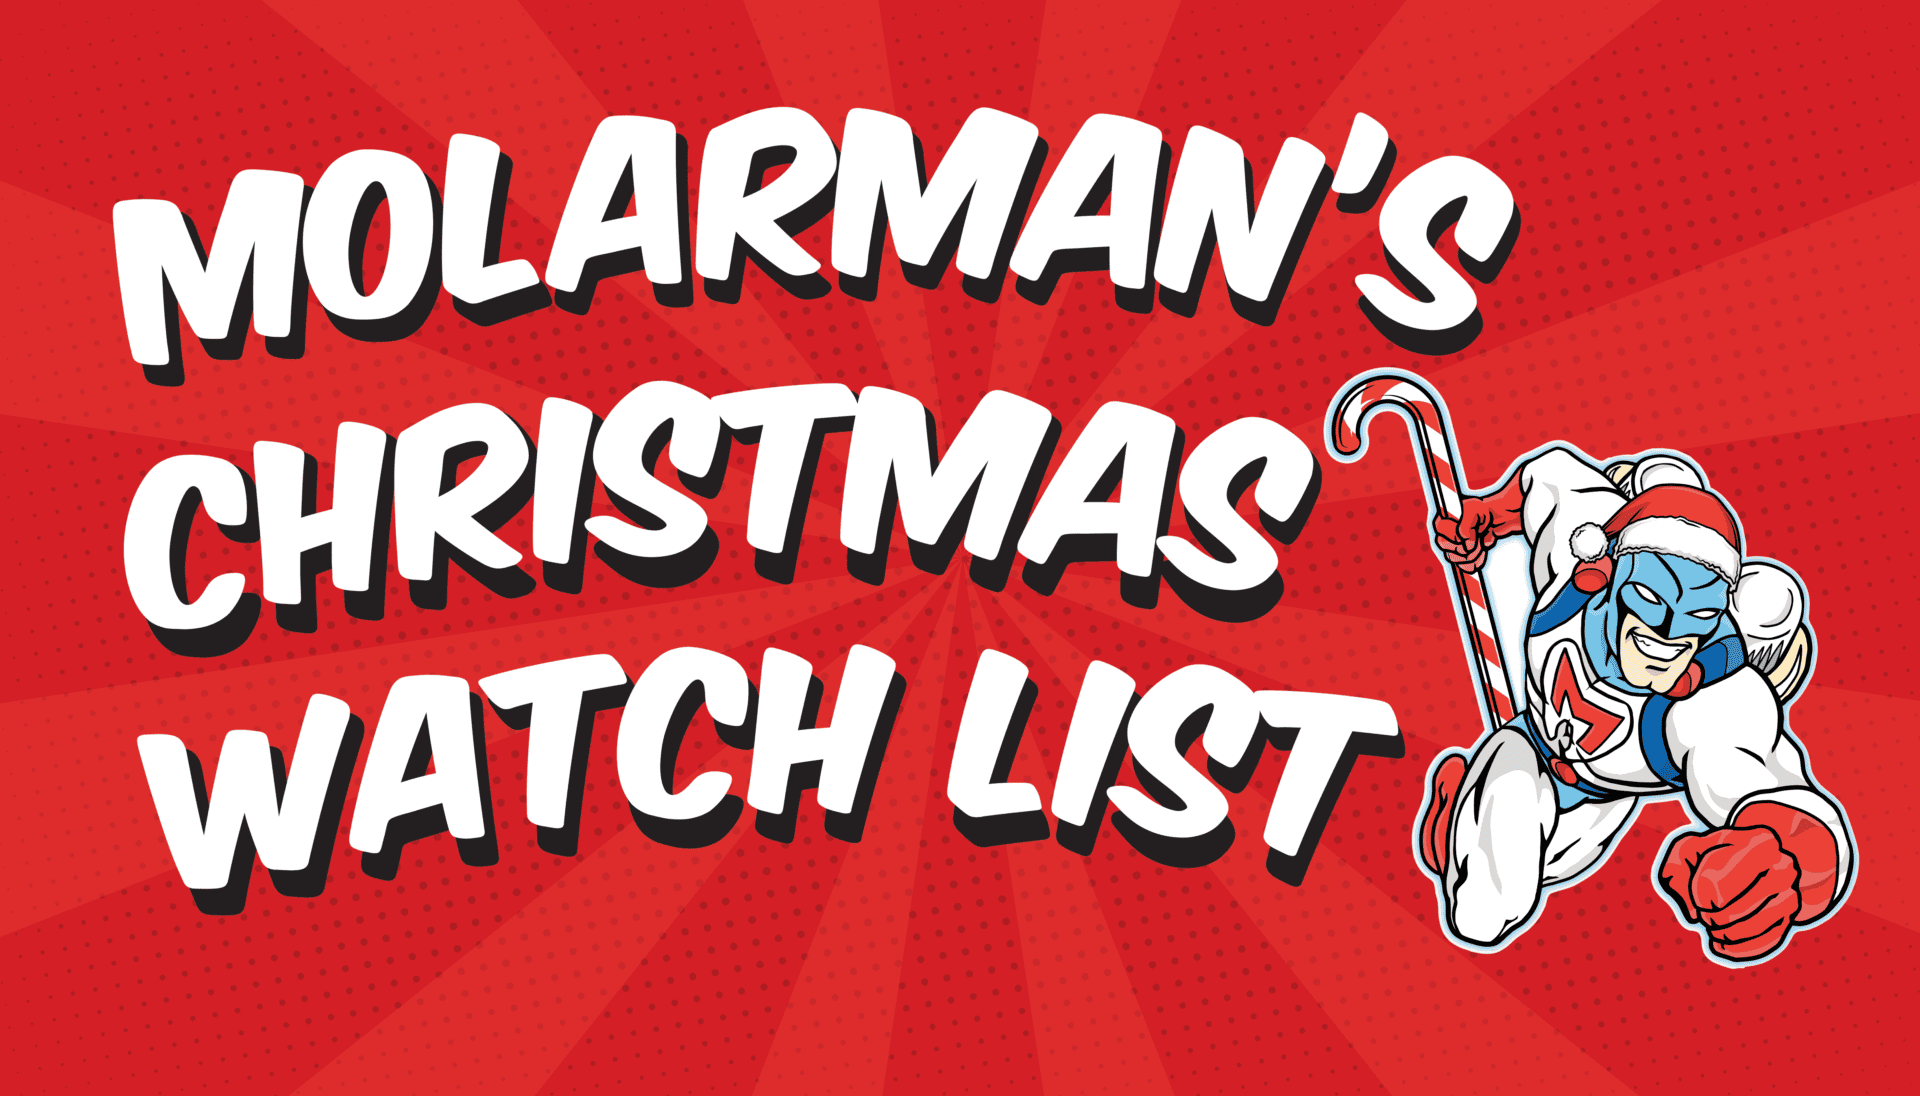 Molarman's Christmas Watch List at Burg Children Dentistry.